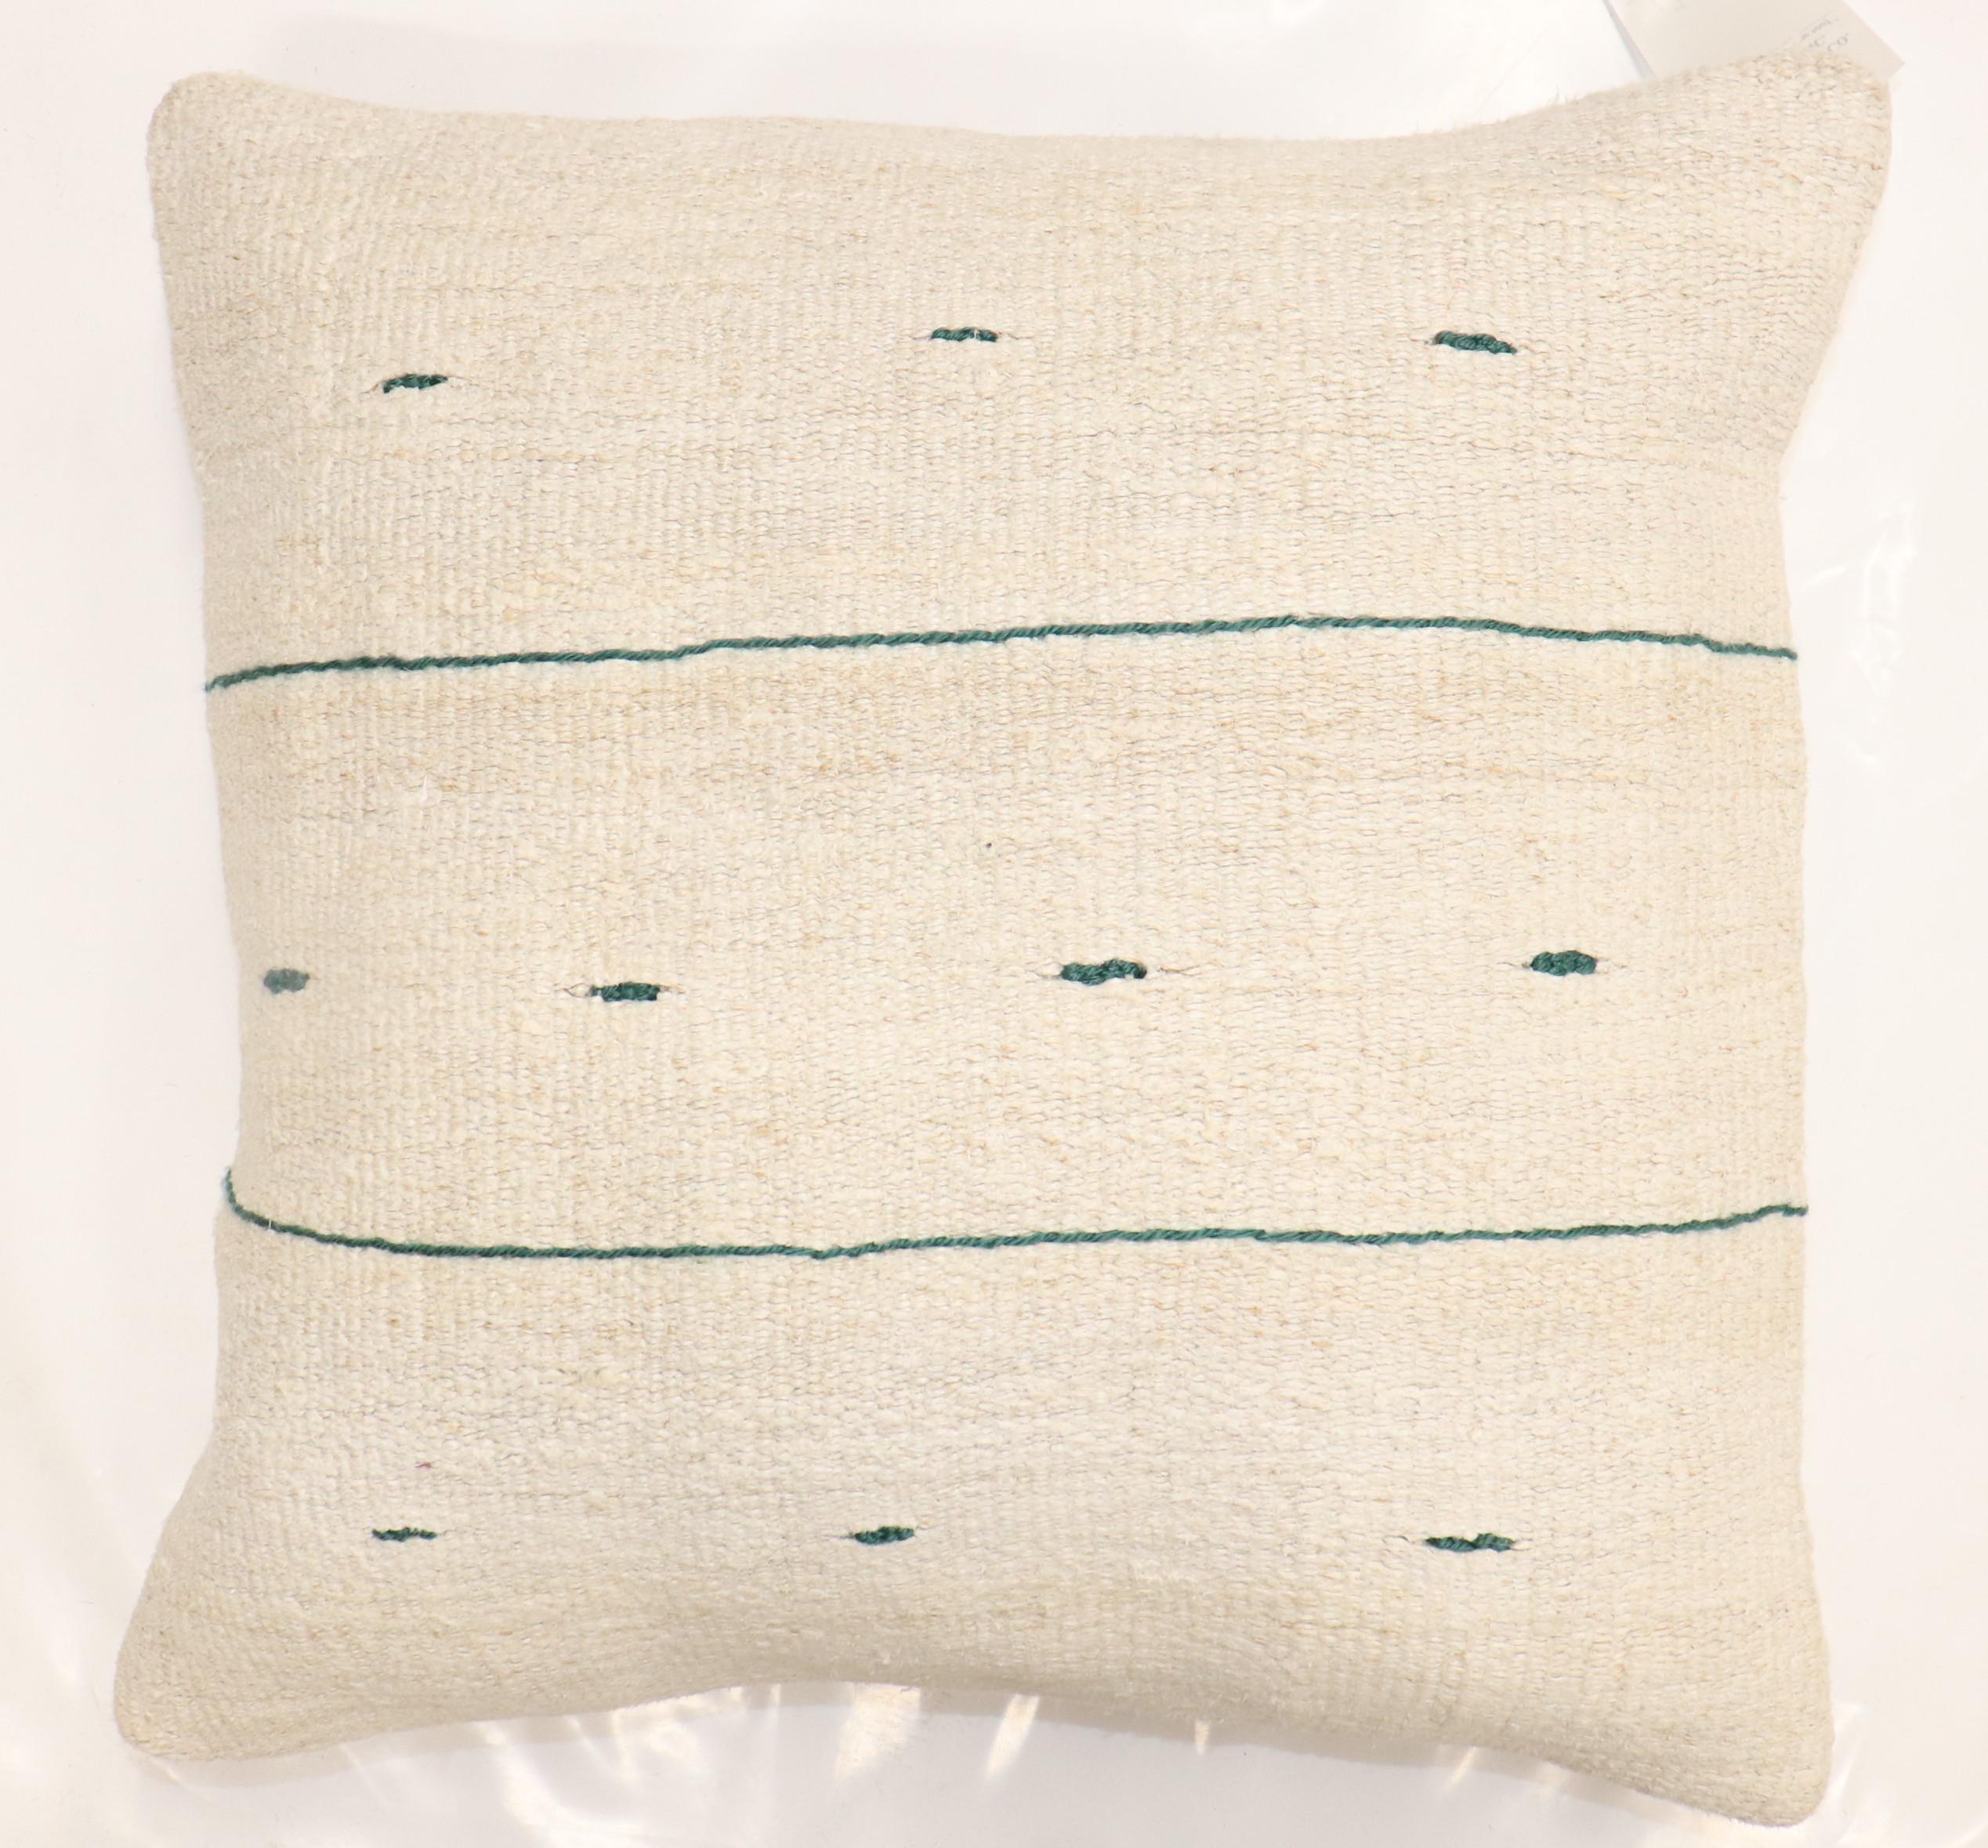 Pillow made from Vintage Turkish Hemp Kilim 

Measures: 19